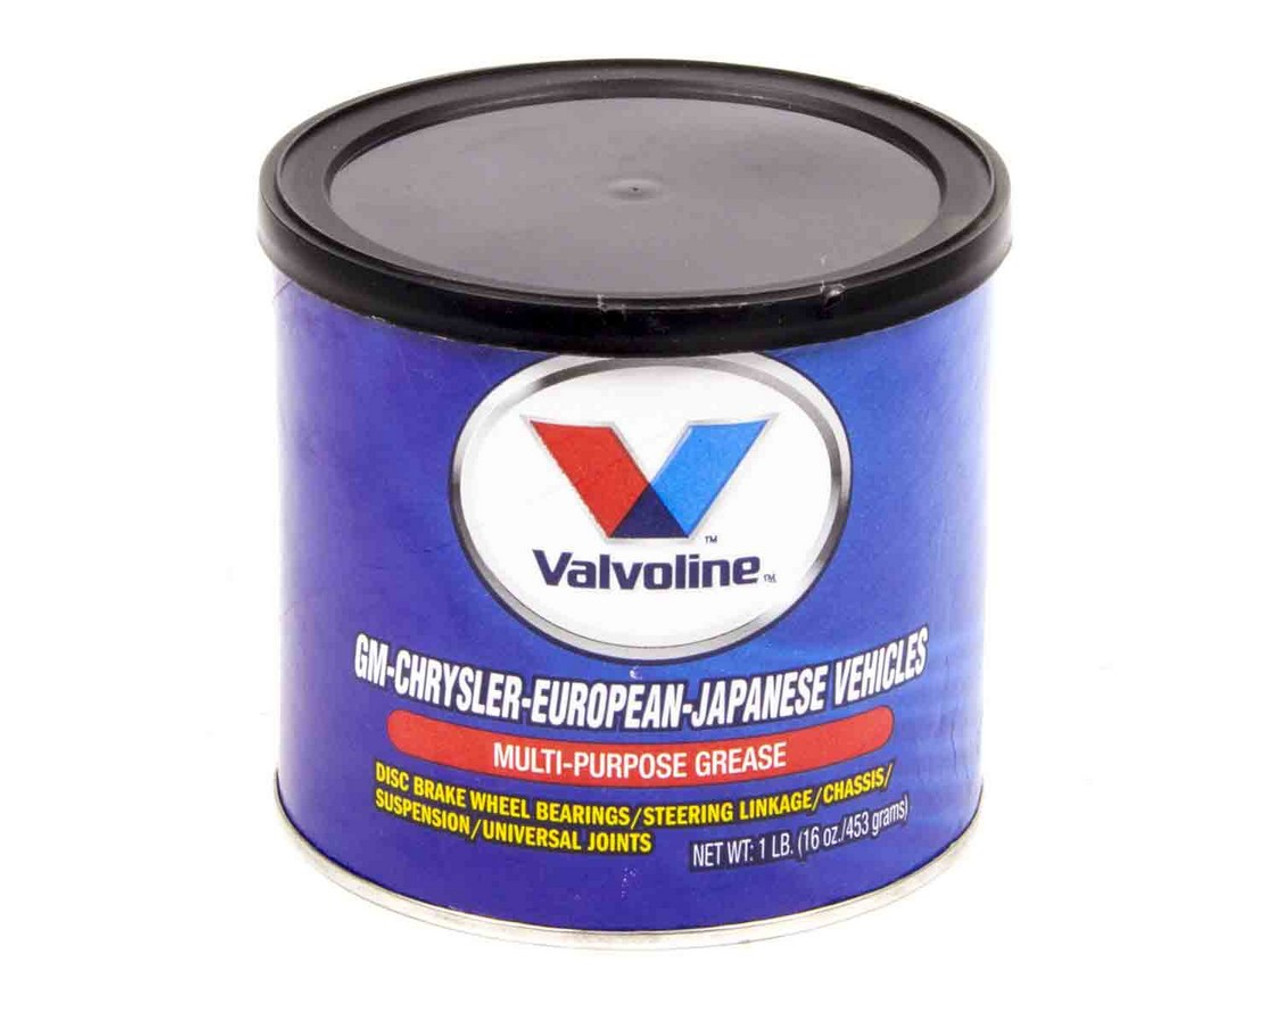 Valvoline Multi Purpose Grease 1# GM-Chrysler Valvoline - VAL614